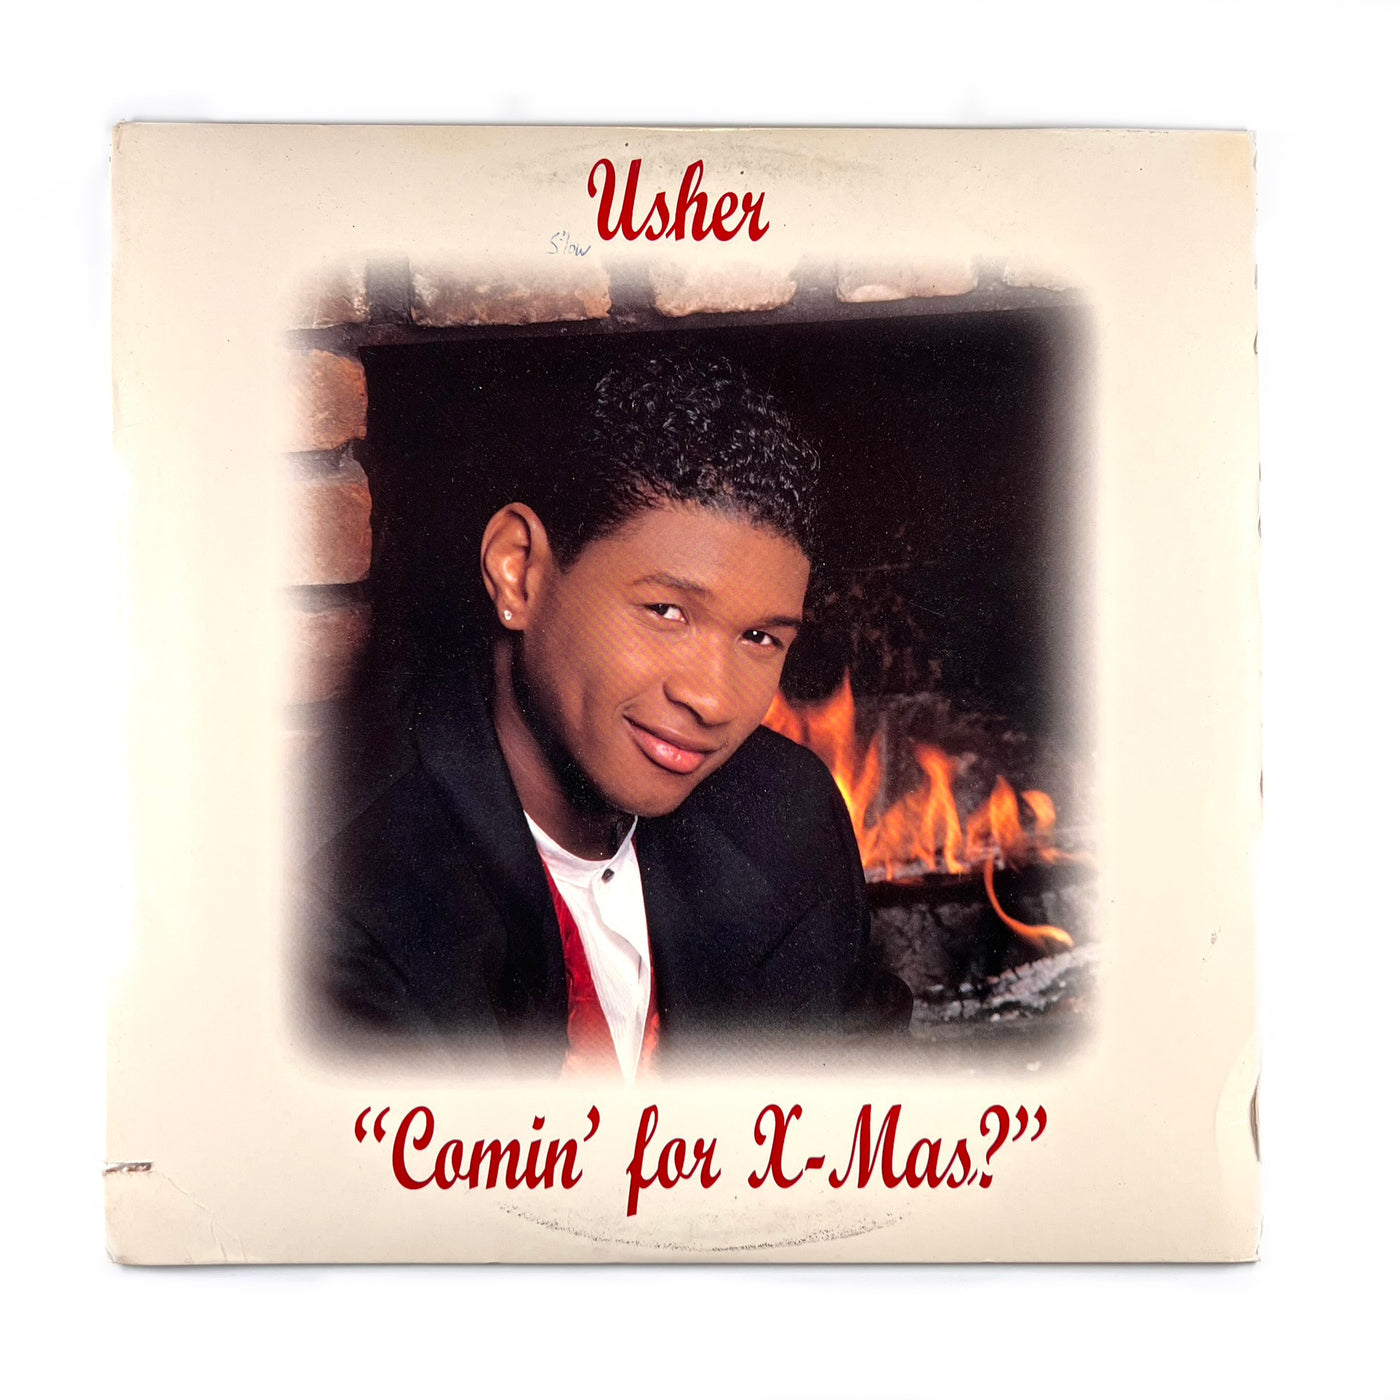 Usher - Comin' For X-Mas?